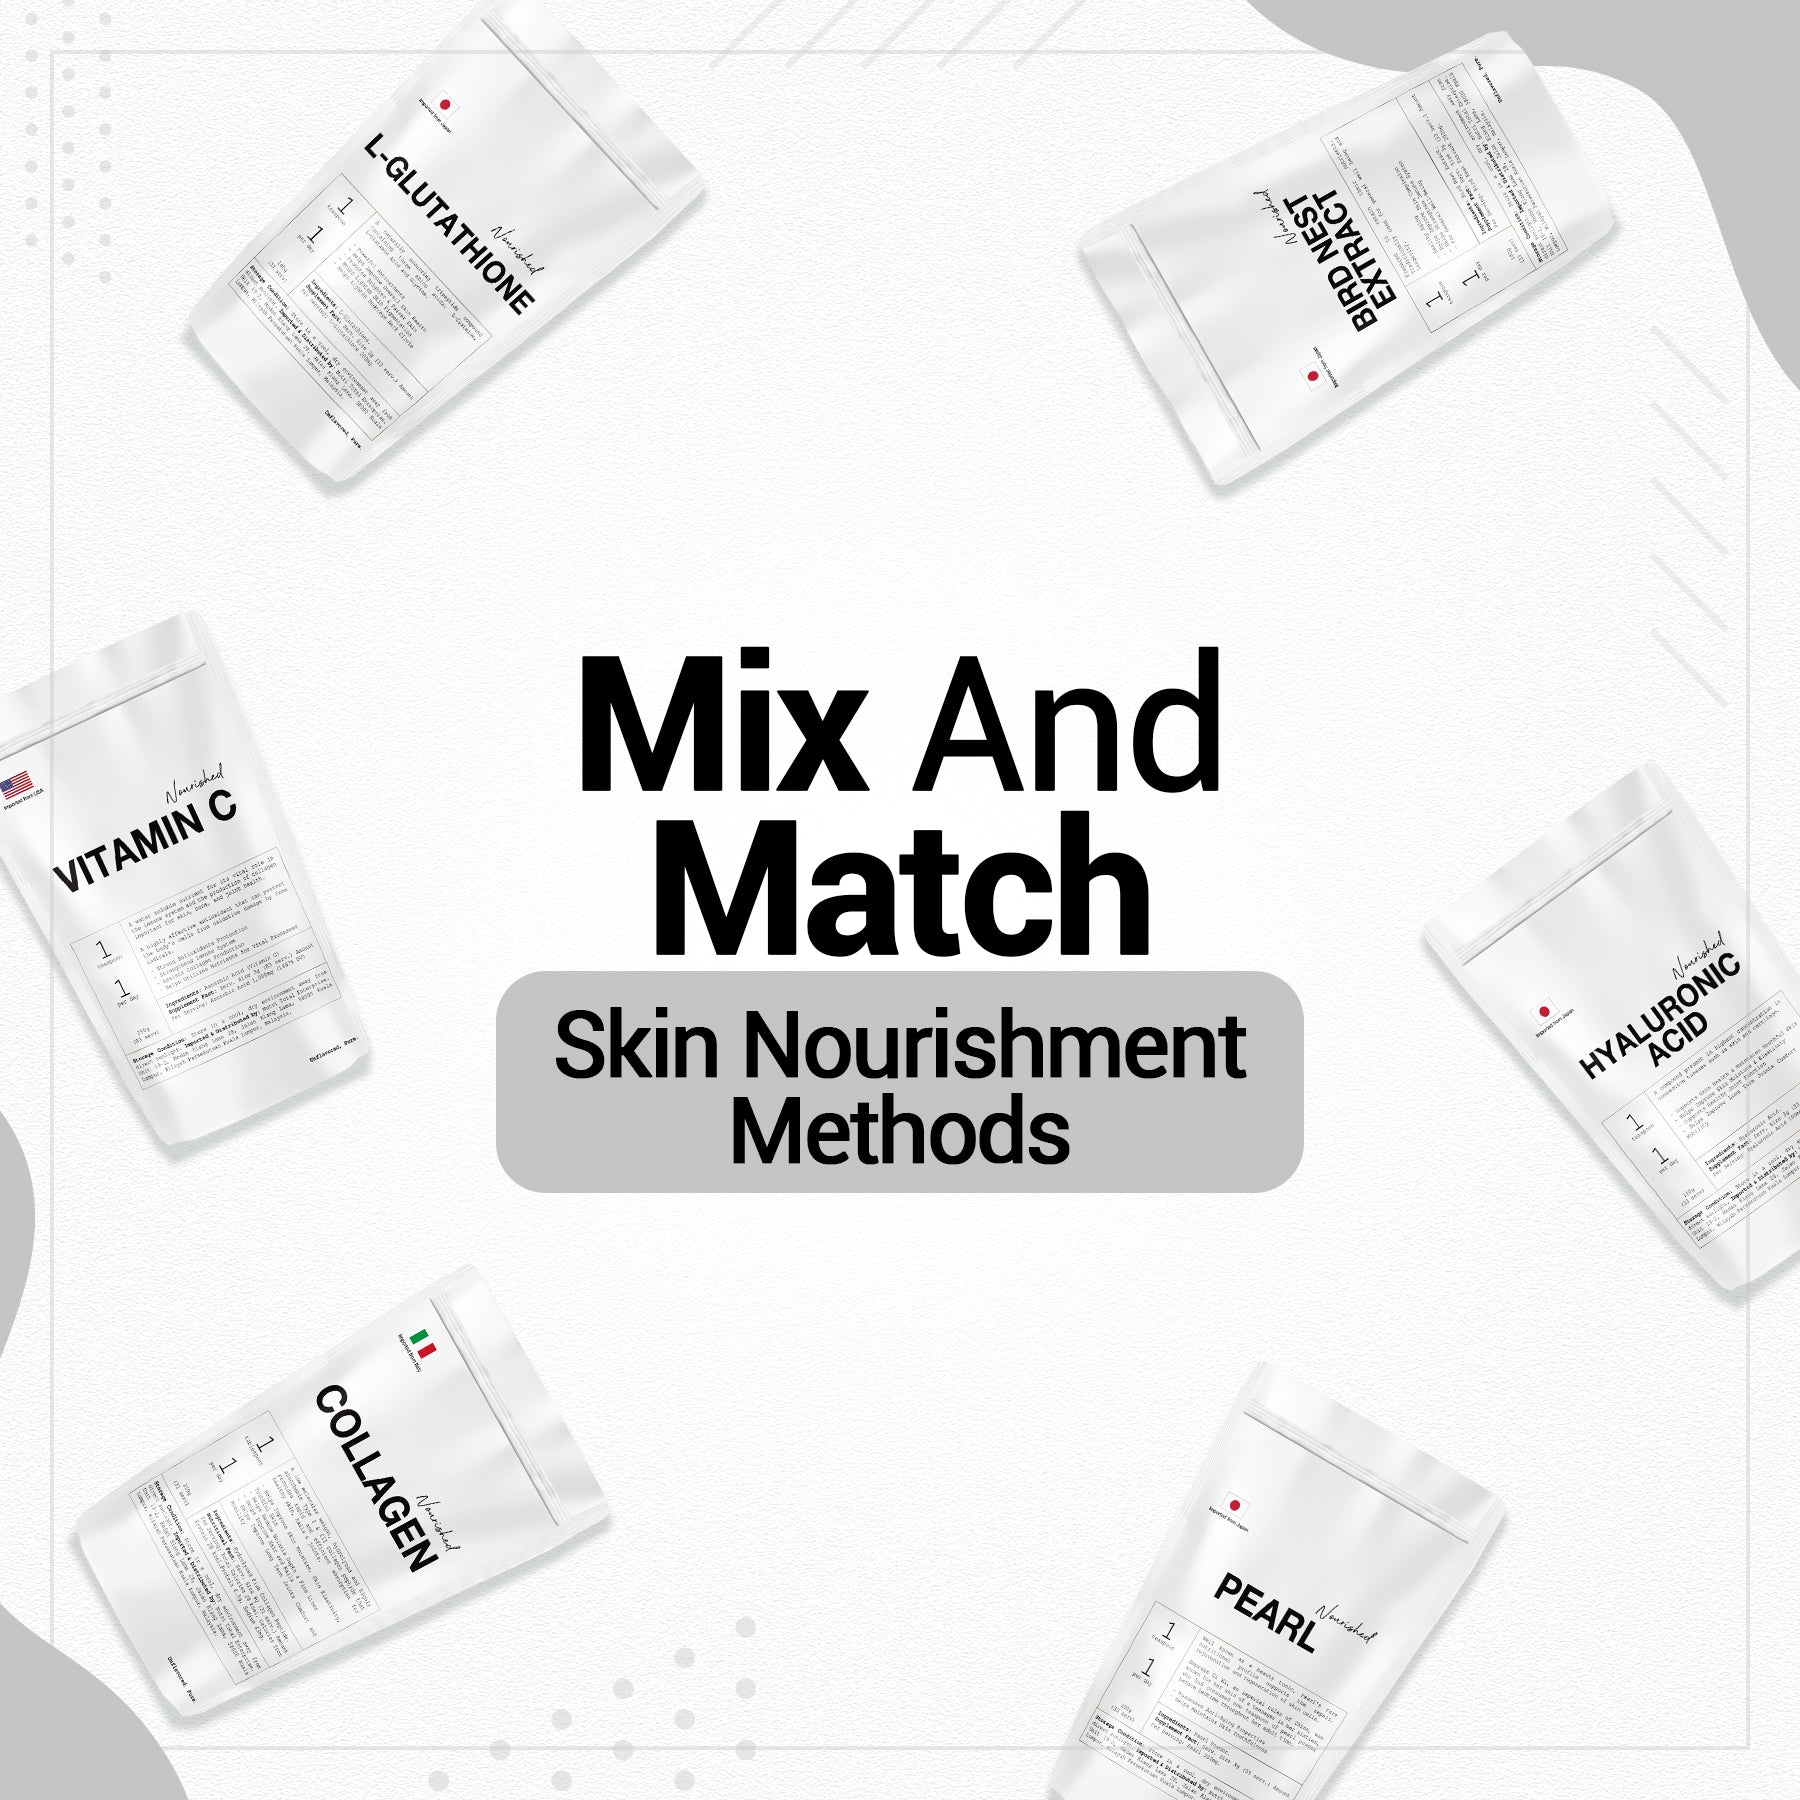 4 Mix And Match Skin Nourishment Methods